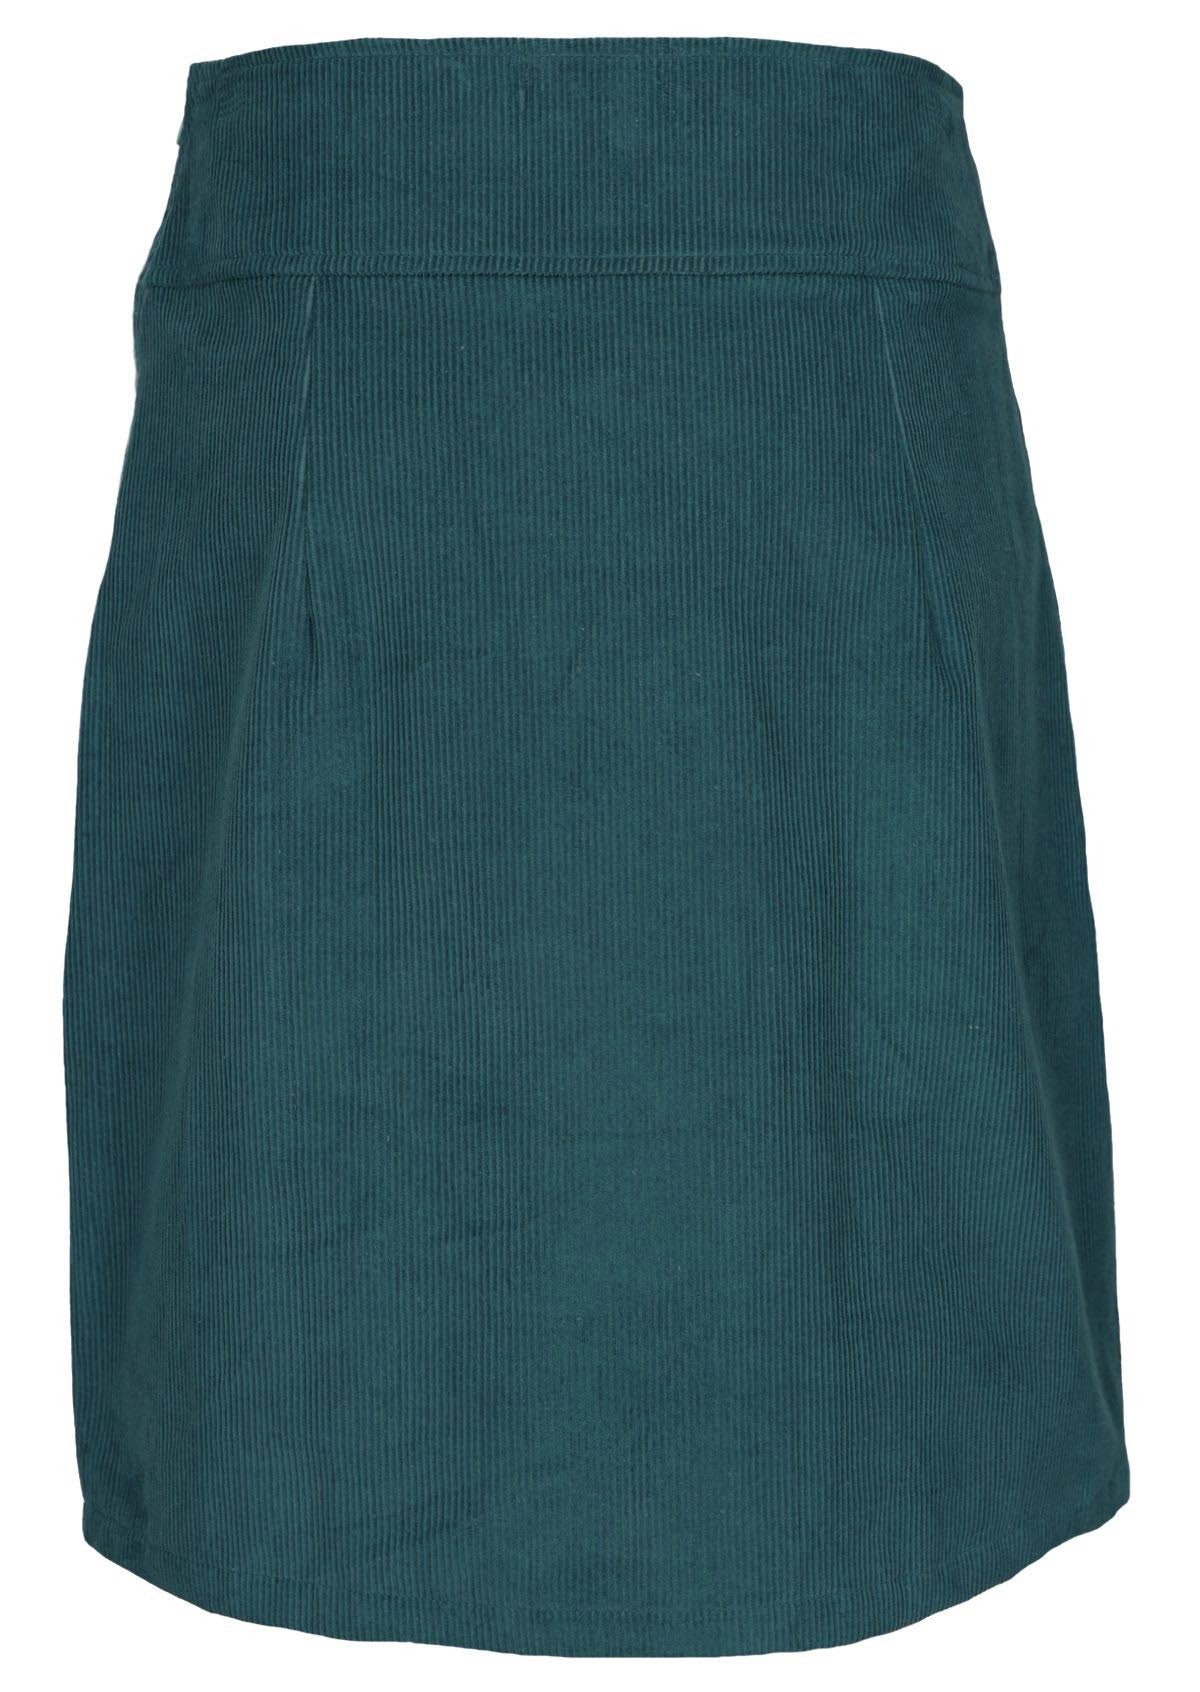 100% cotton corduroy skirt has a deep teal colour.